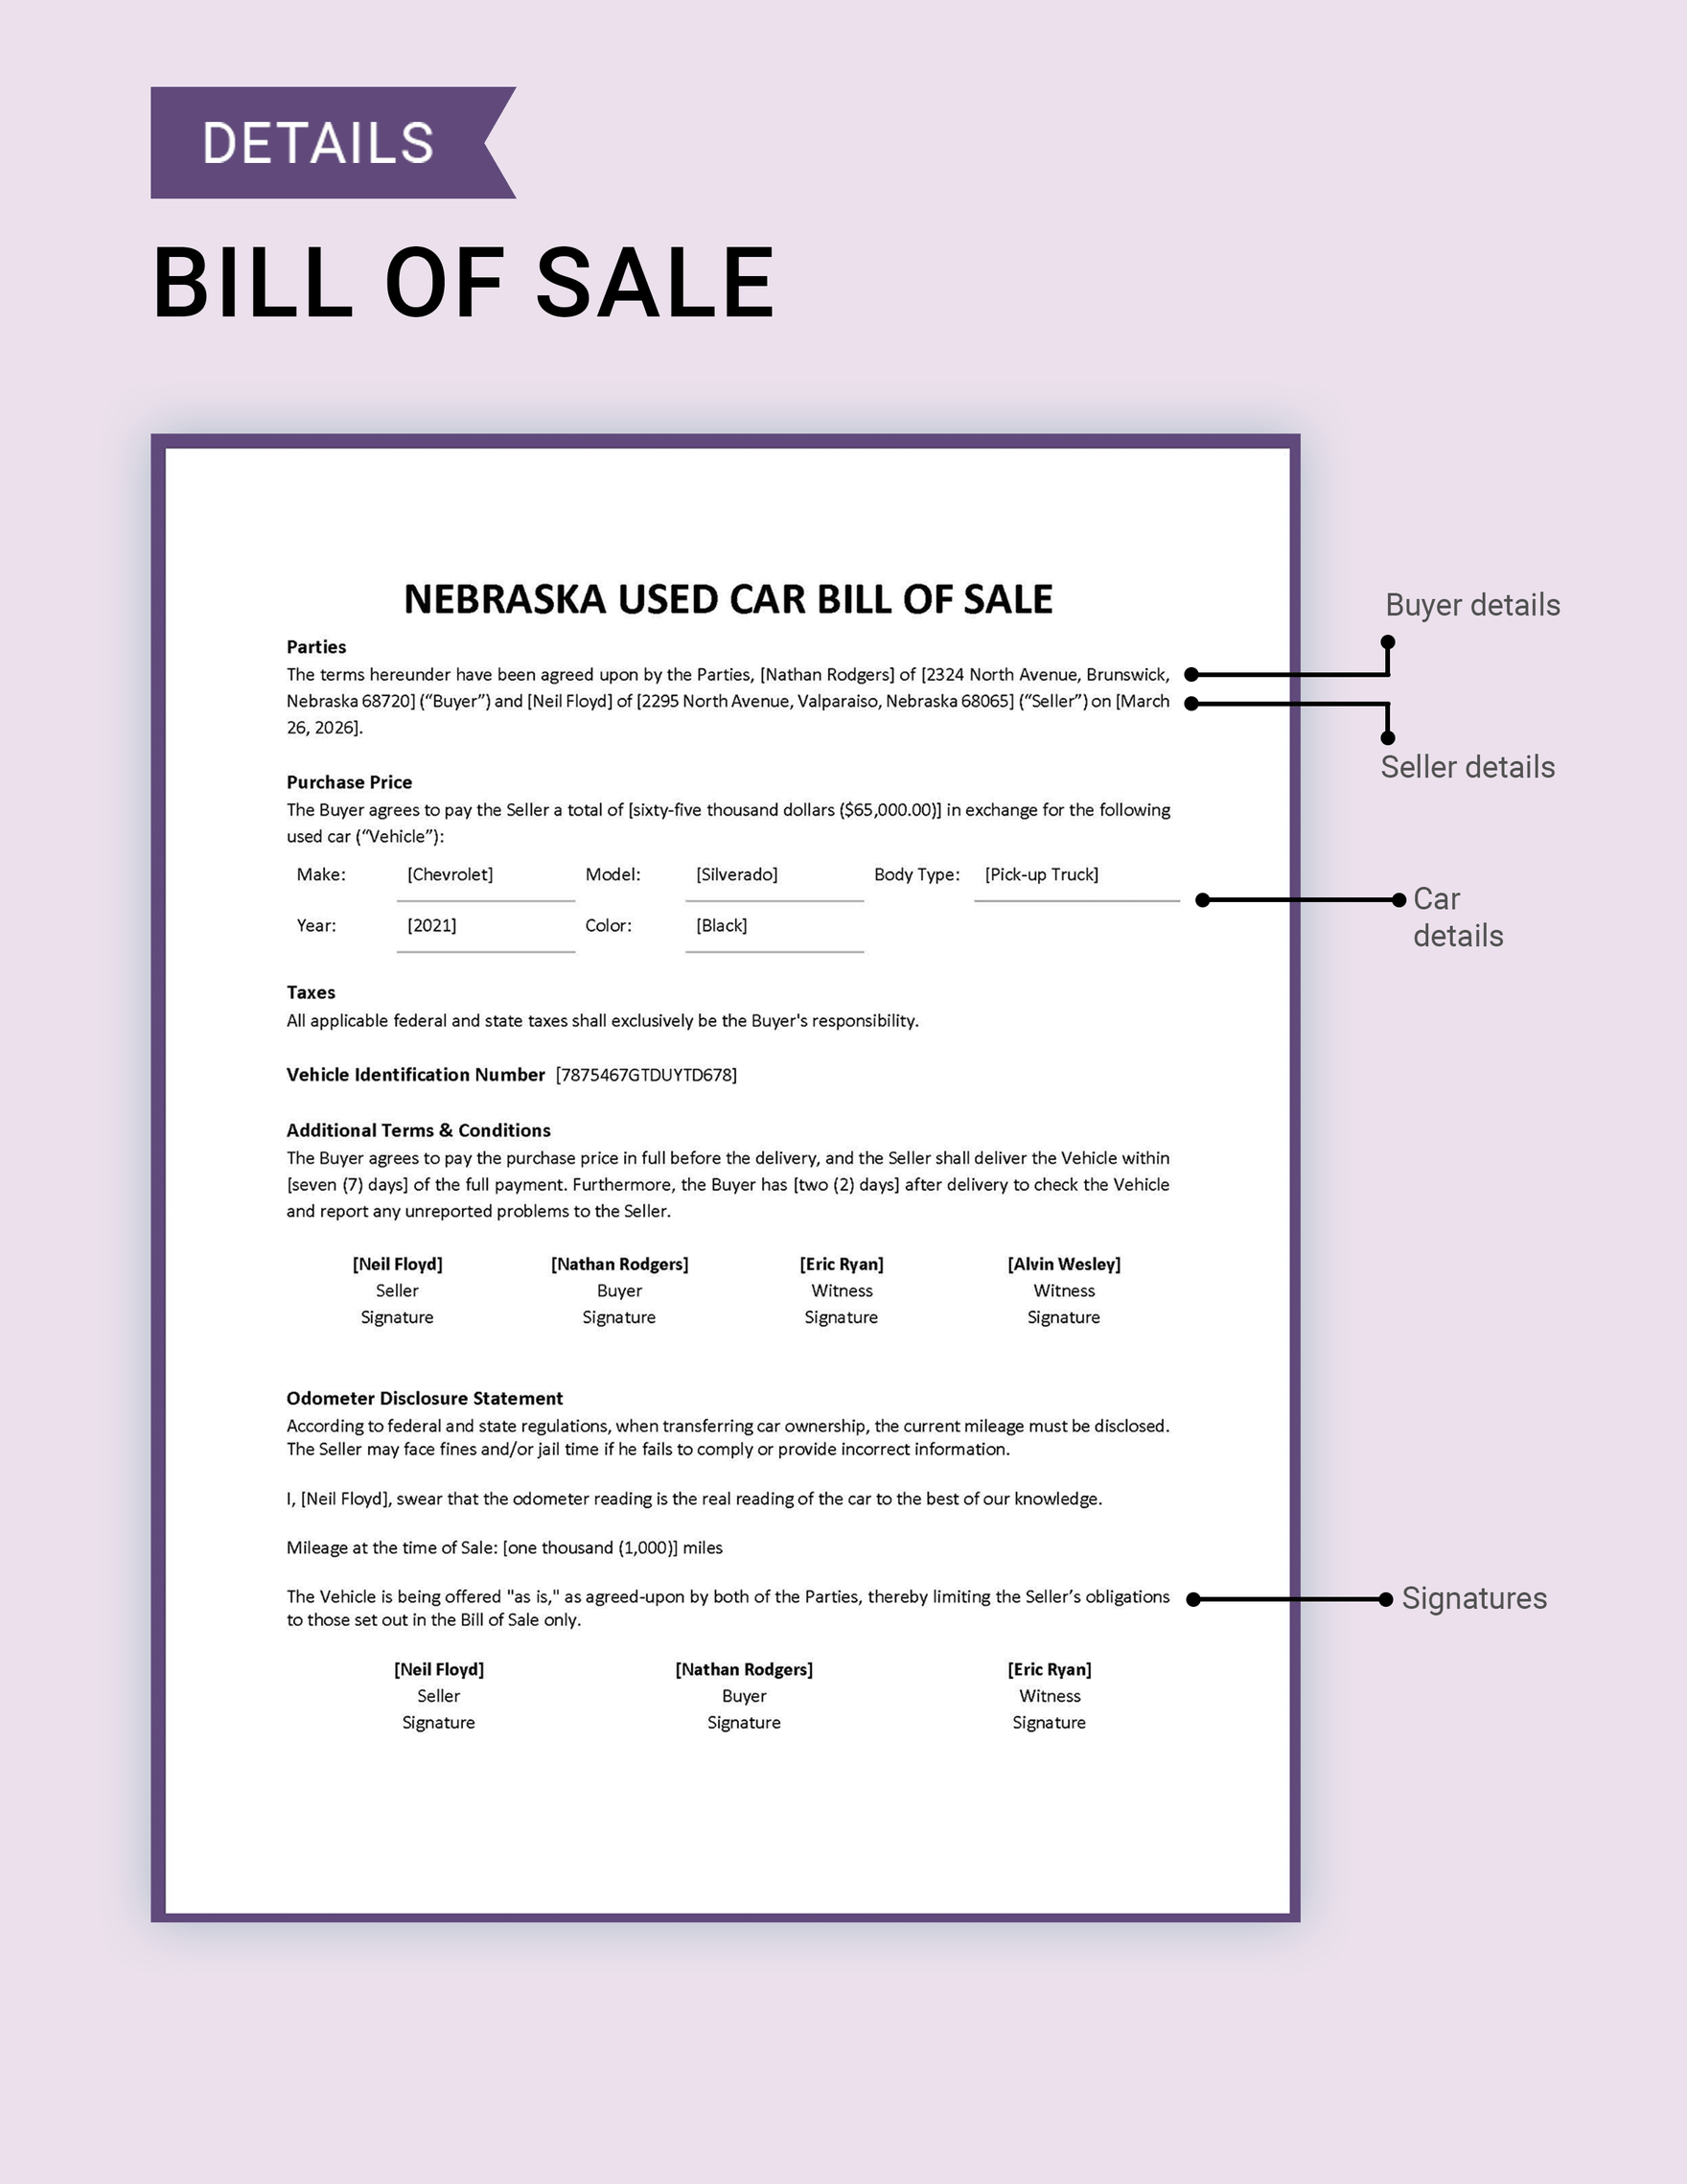 nebraska-used-car-bill-of-sale-template-download-in-word-google-docs